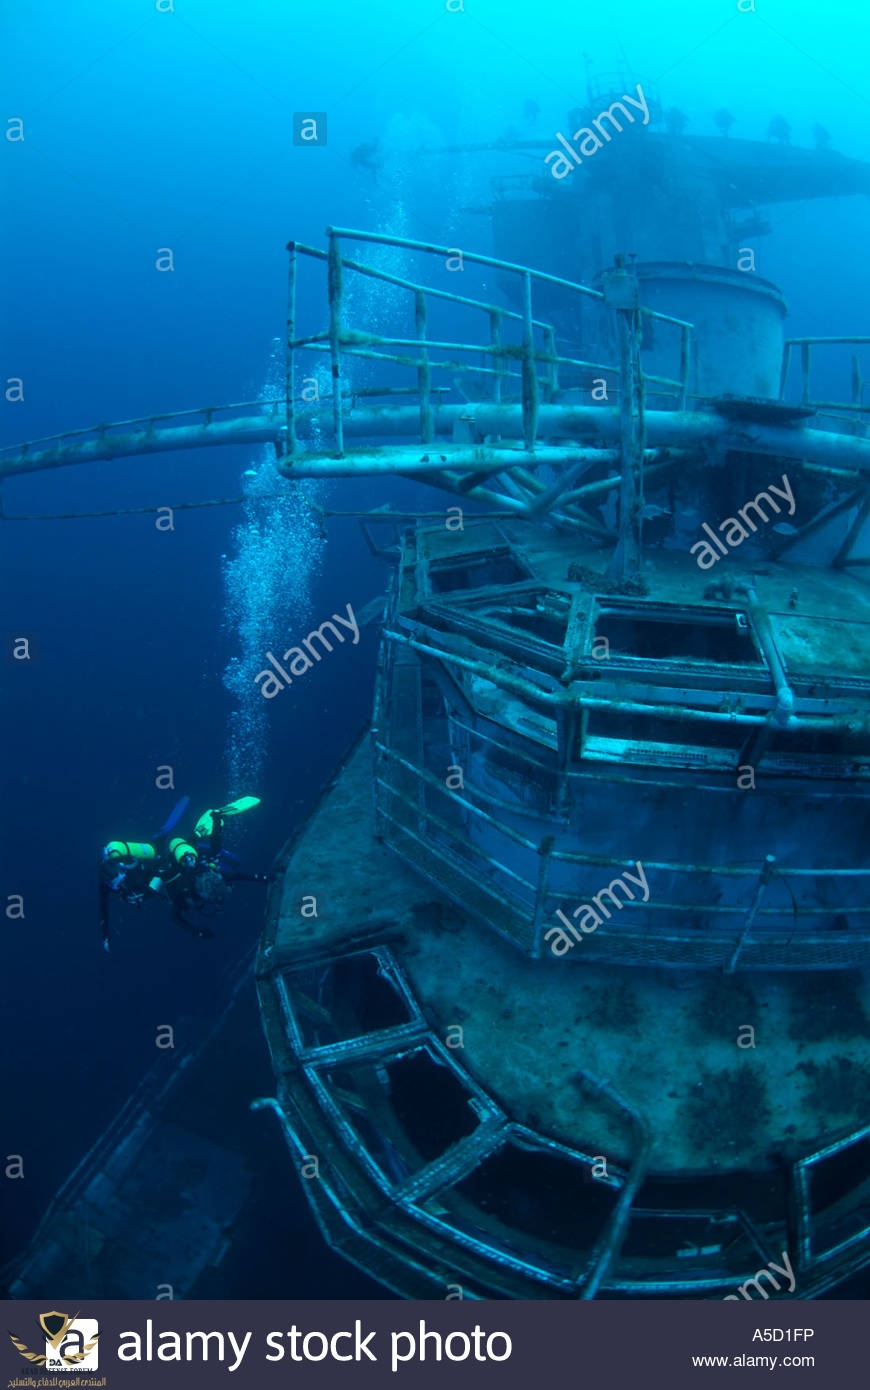 oriskany-wreck-sunk-off-pensacola-florida-gulf-of-mexico-A5D1FP.jpg